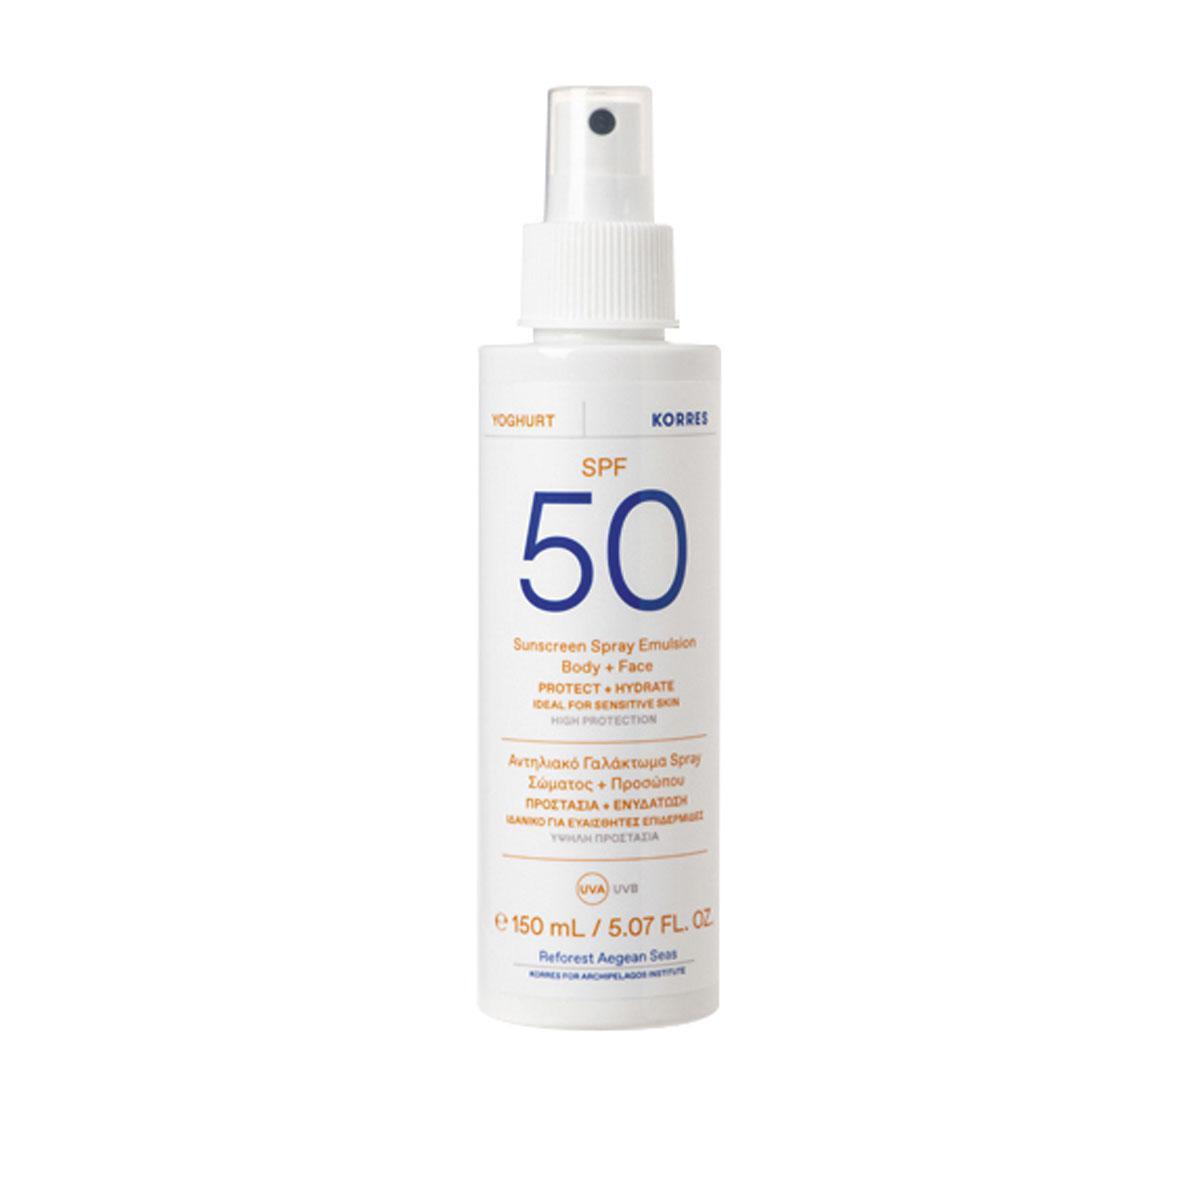 Yoghurt Sunscreen Spray Emulsion Body + Face SPF50, Korres, 24,90 euros